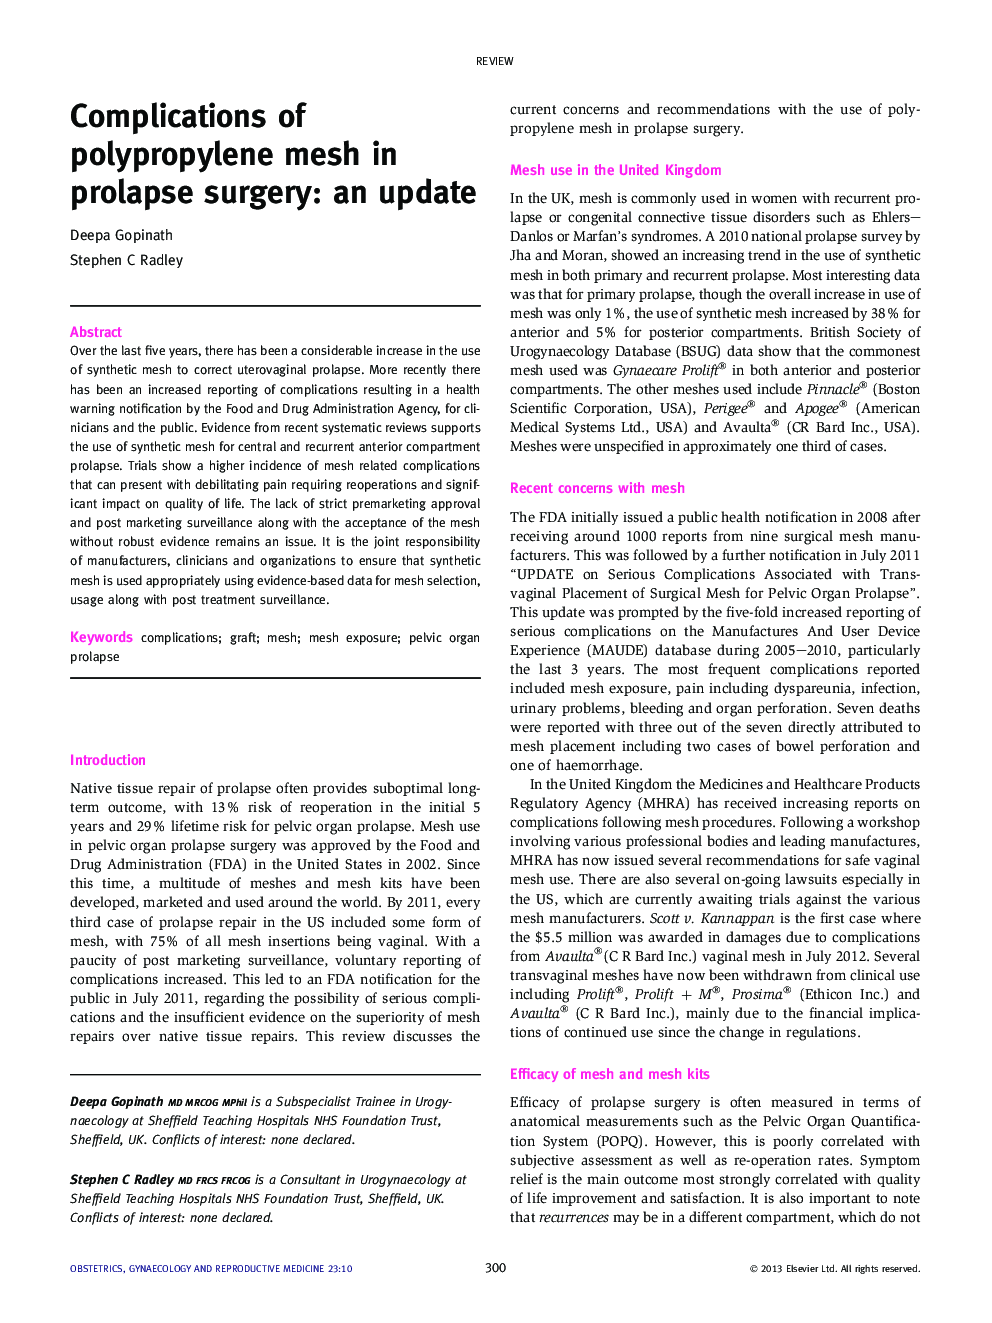 Complications of polypropylene mesh in prolapse surgery: an update